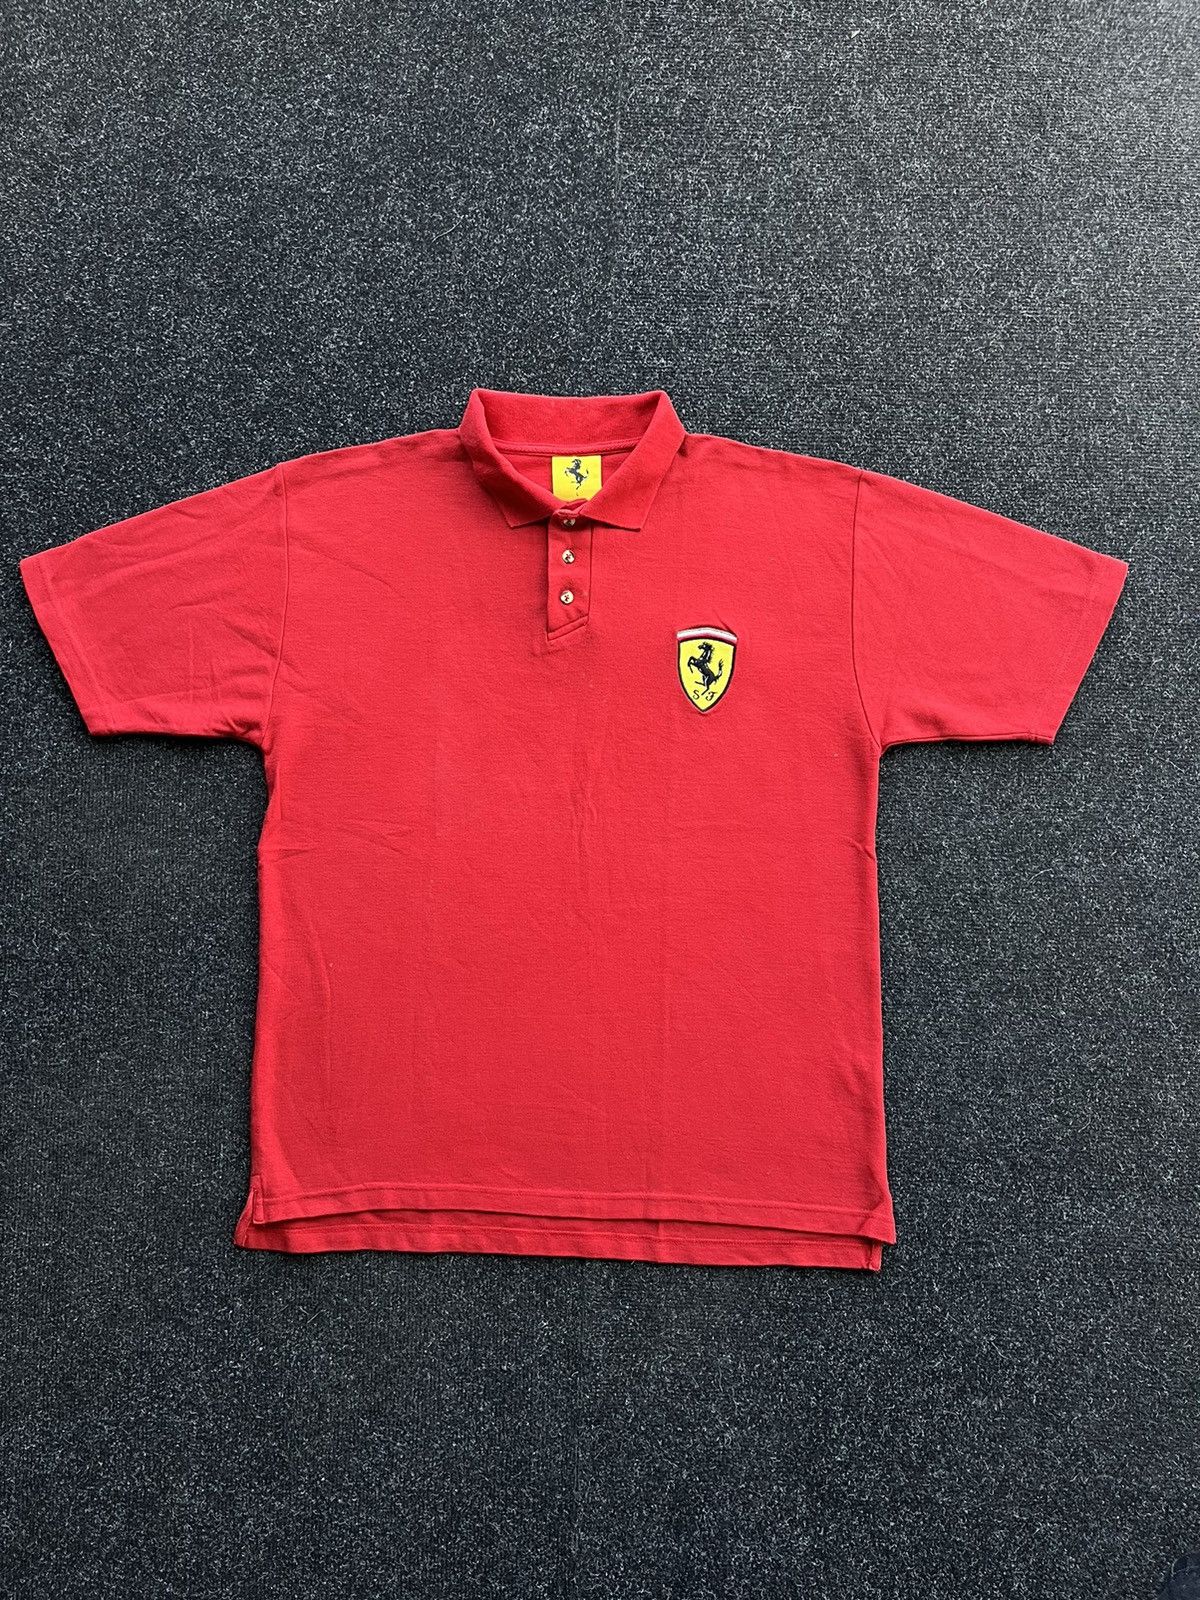 Pre-owned Formula Uno X Racing Vintage 1996 Ferrari Formula One Red Marlboro Polo T Shirt